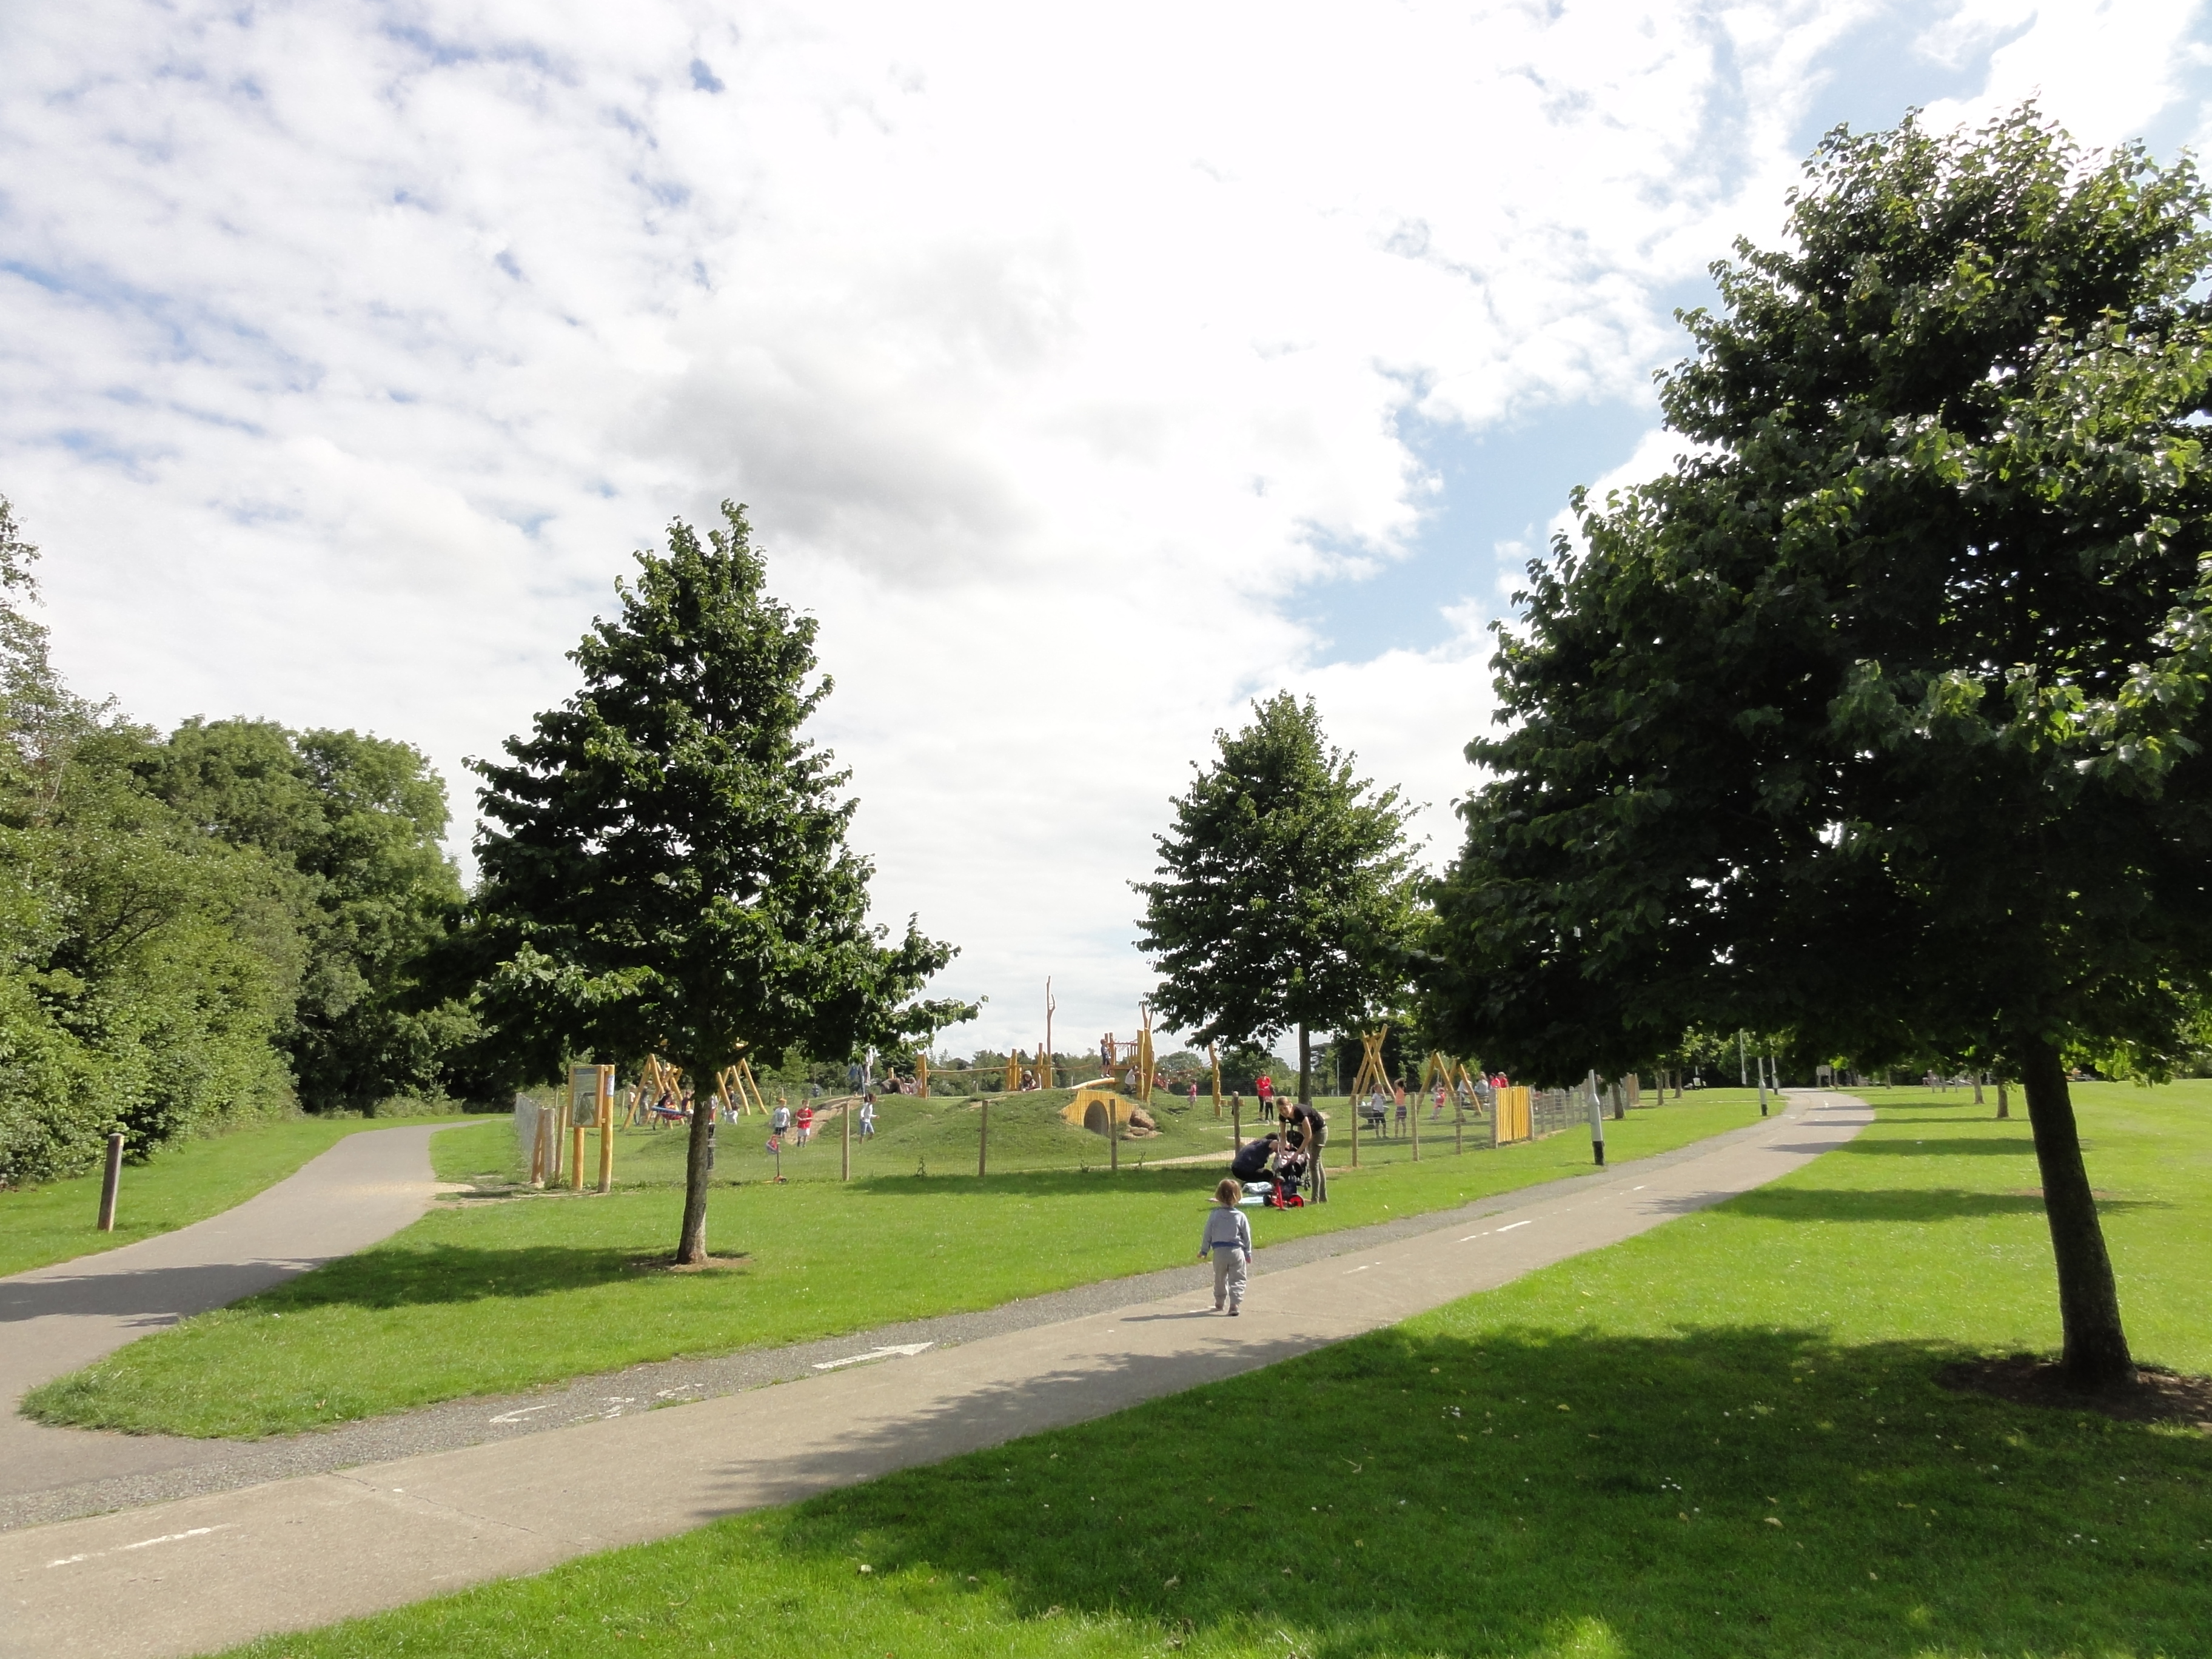 Playground for Stillorgan heath, located in Dublin